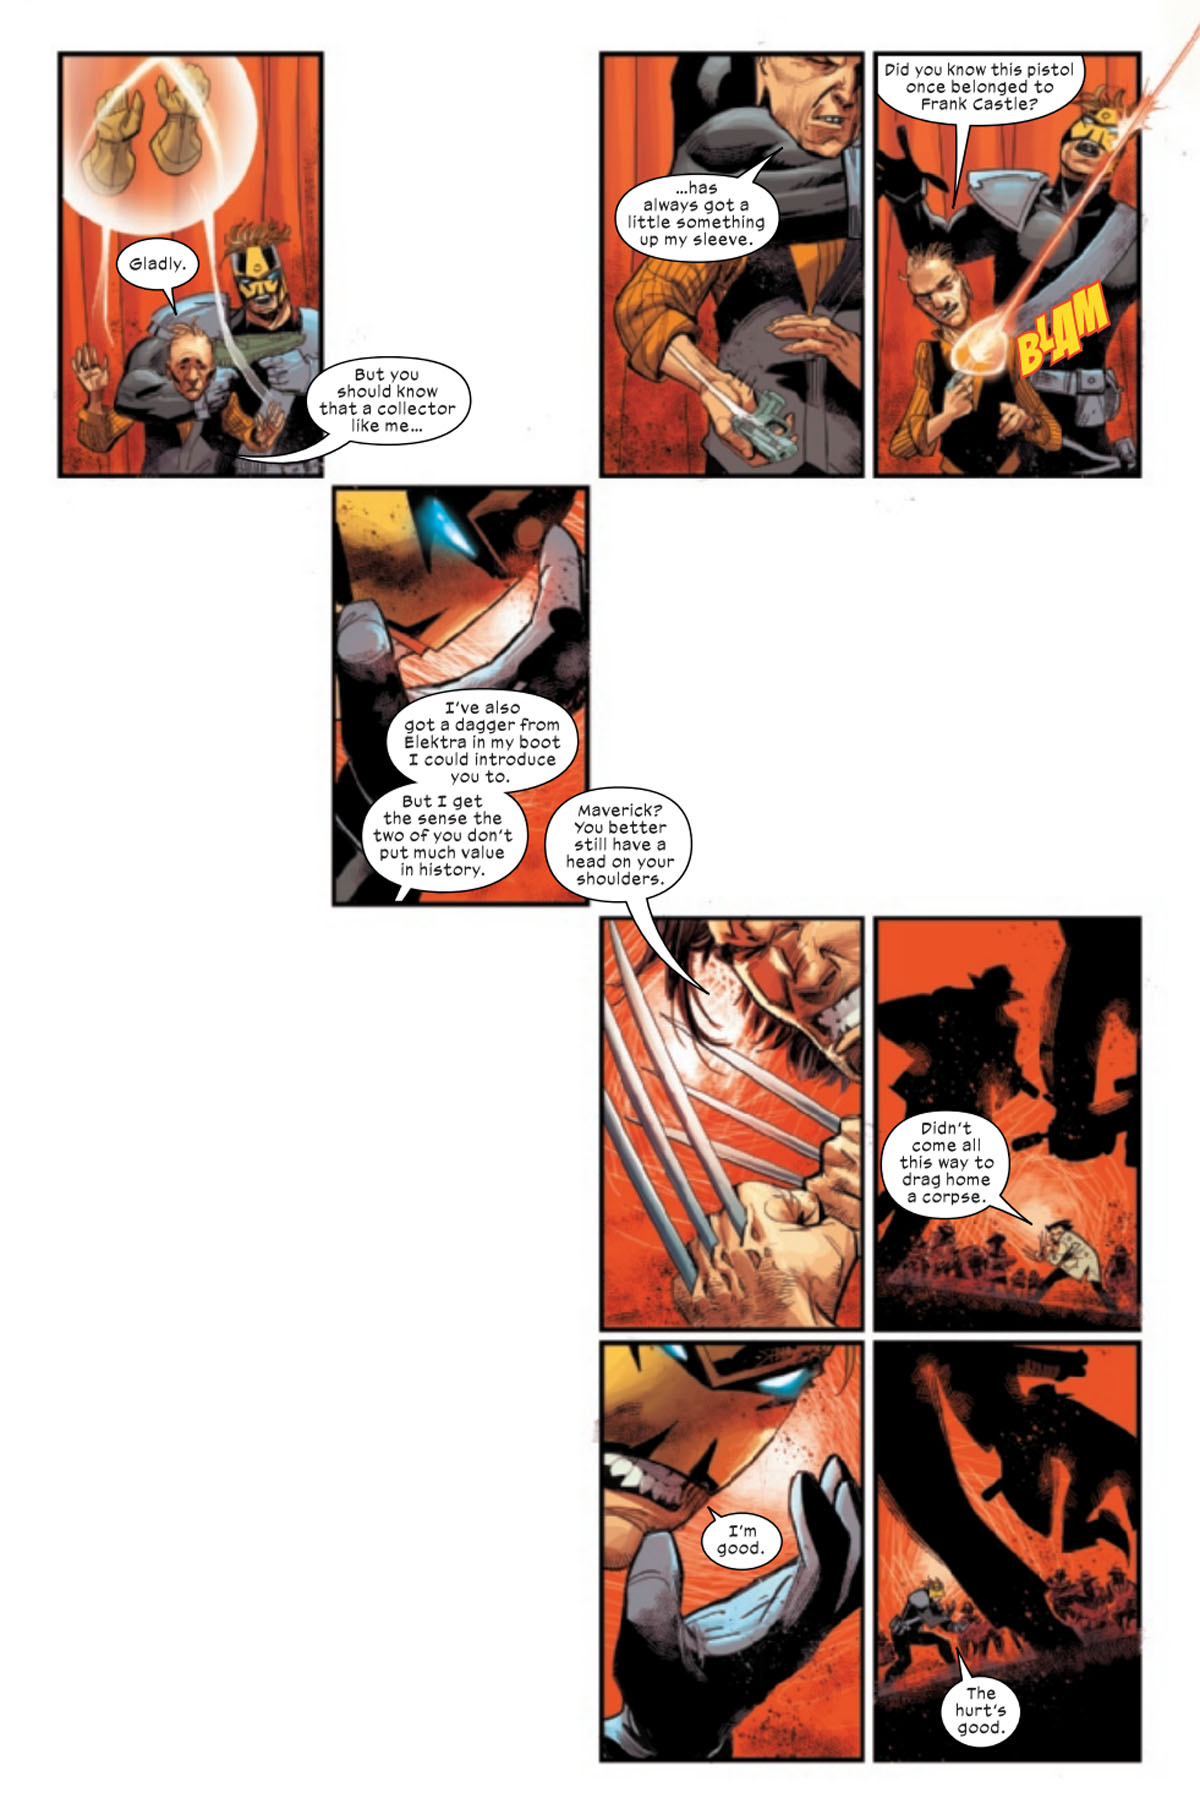 Wolverine #10 page 2